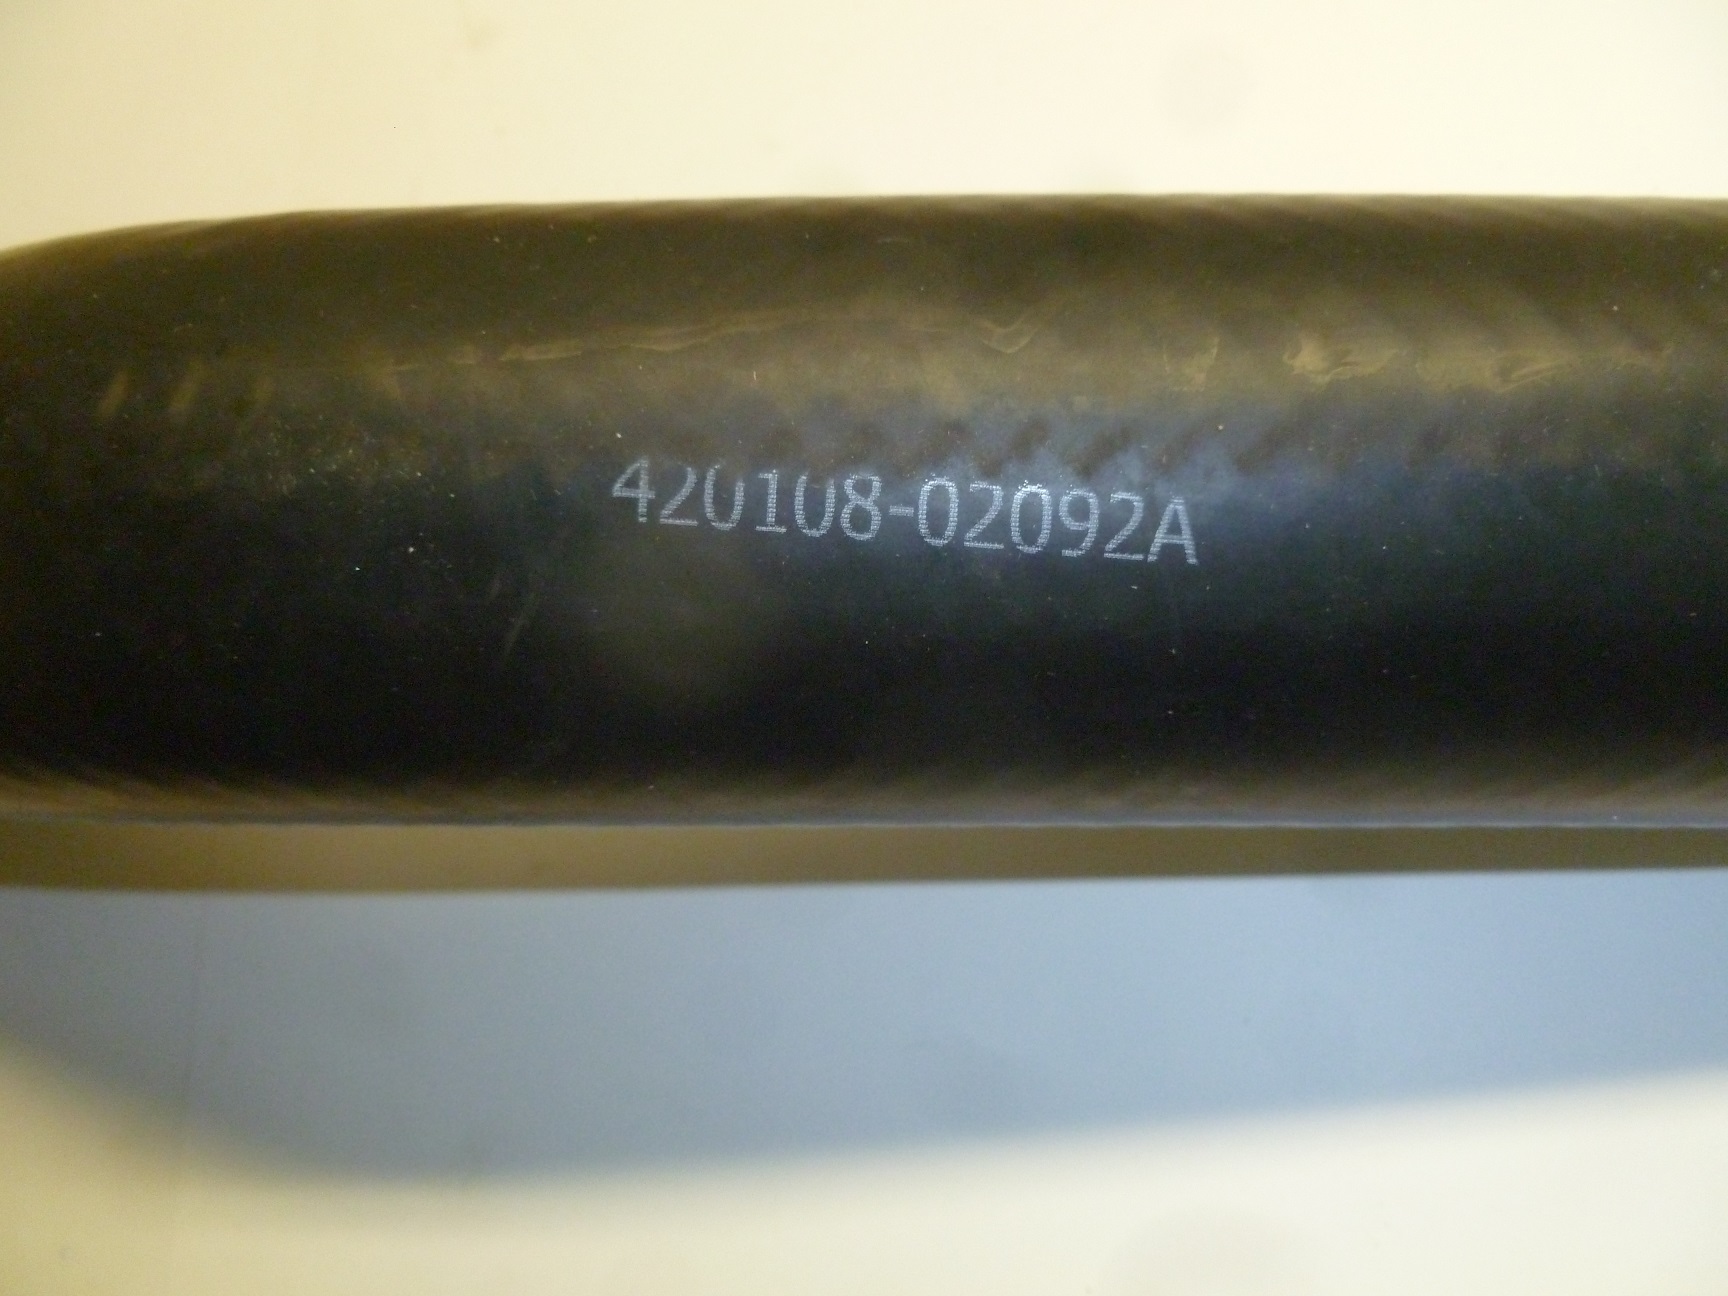 Патрубок радиатора верхний DP126LB/Ruber hose,water outlet 420108-02092A